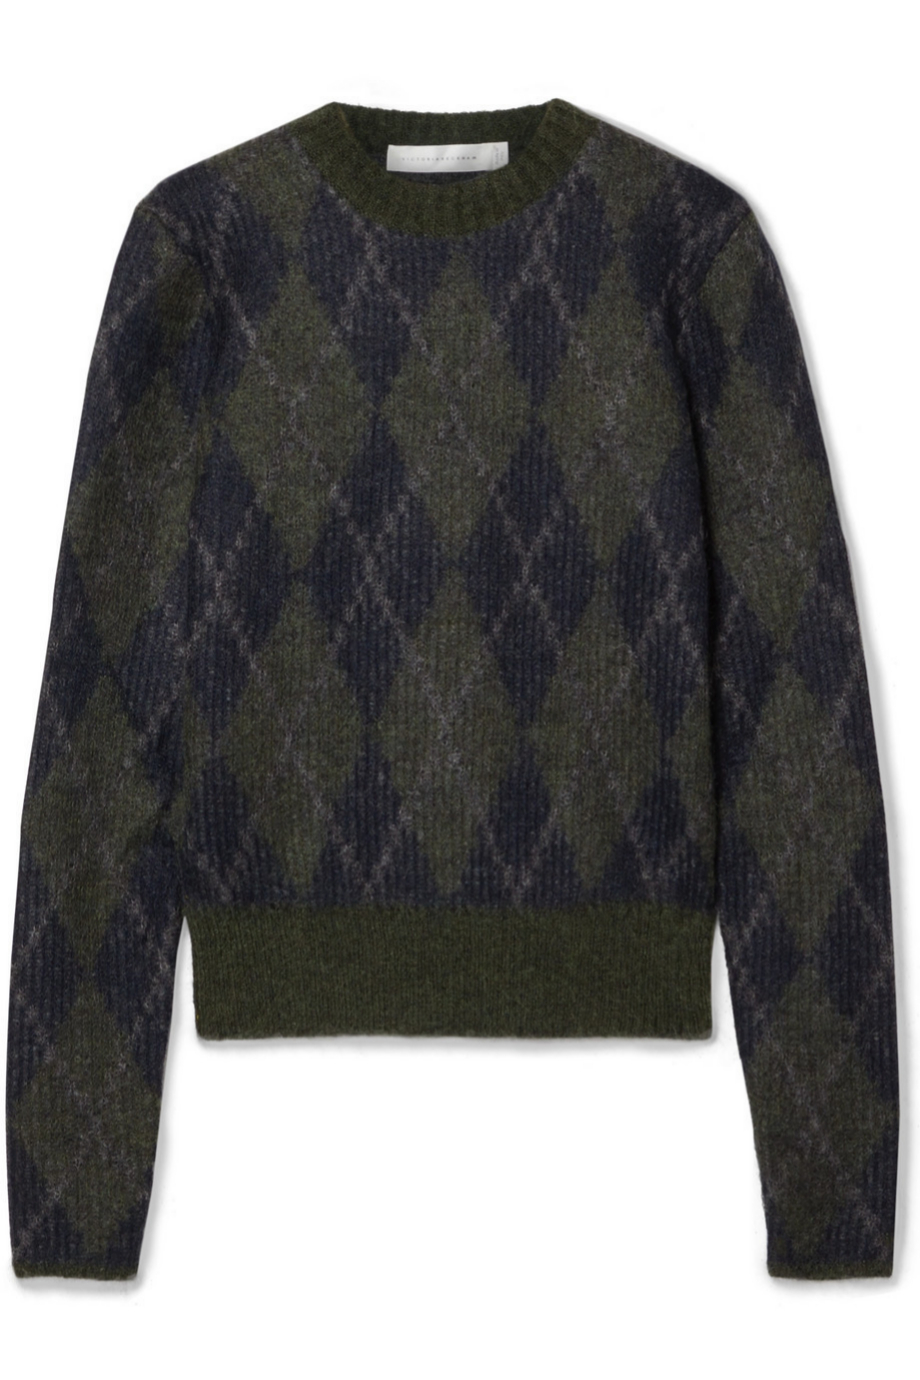 Jersey de rombos de lana de Victoria Beckham para Net a Porter (c.p.v)